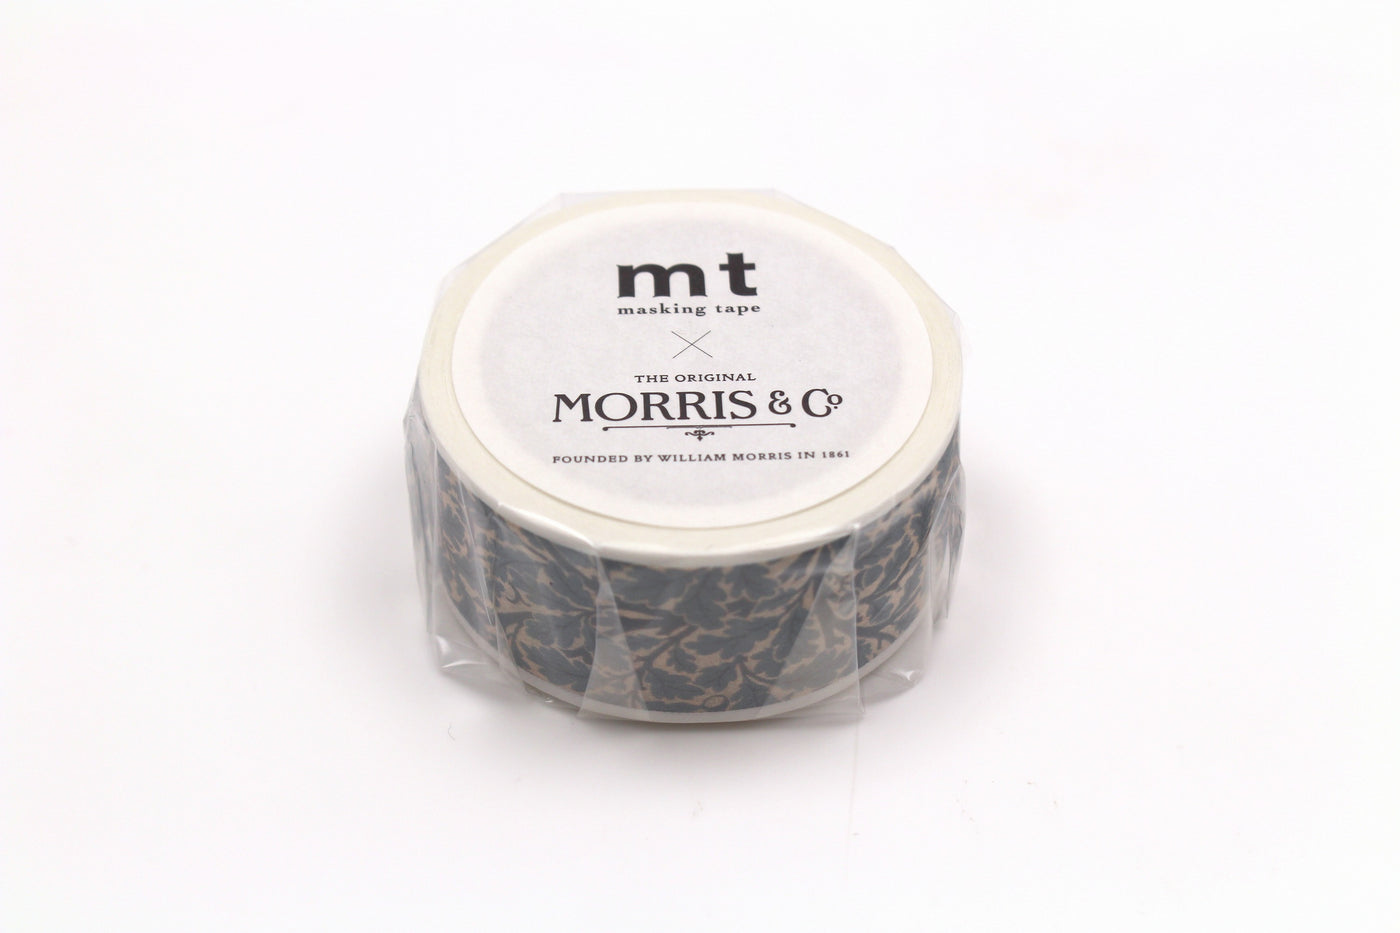 Masking Tape, Morris & Co Oaktree